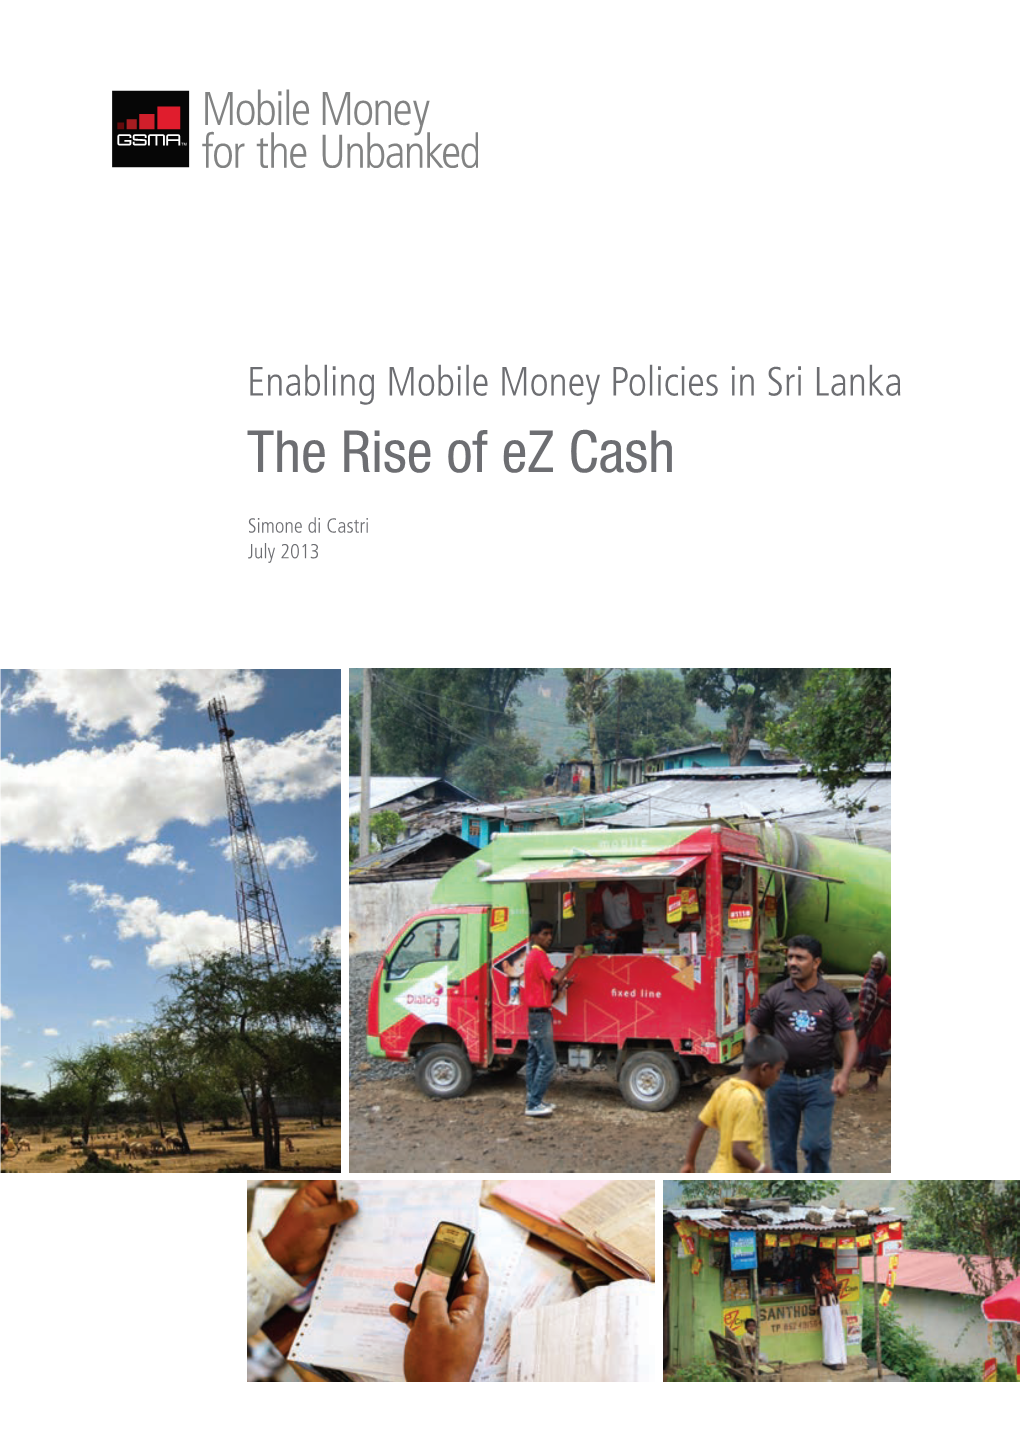 Enabling Mobile Money Policies in Sri Lanka: the Rise of Ez Cash